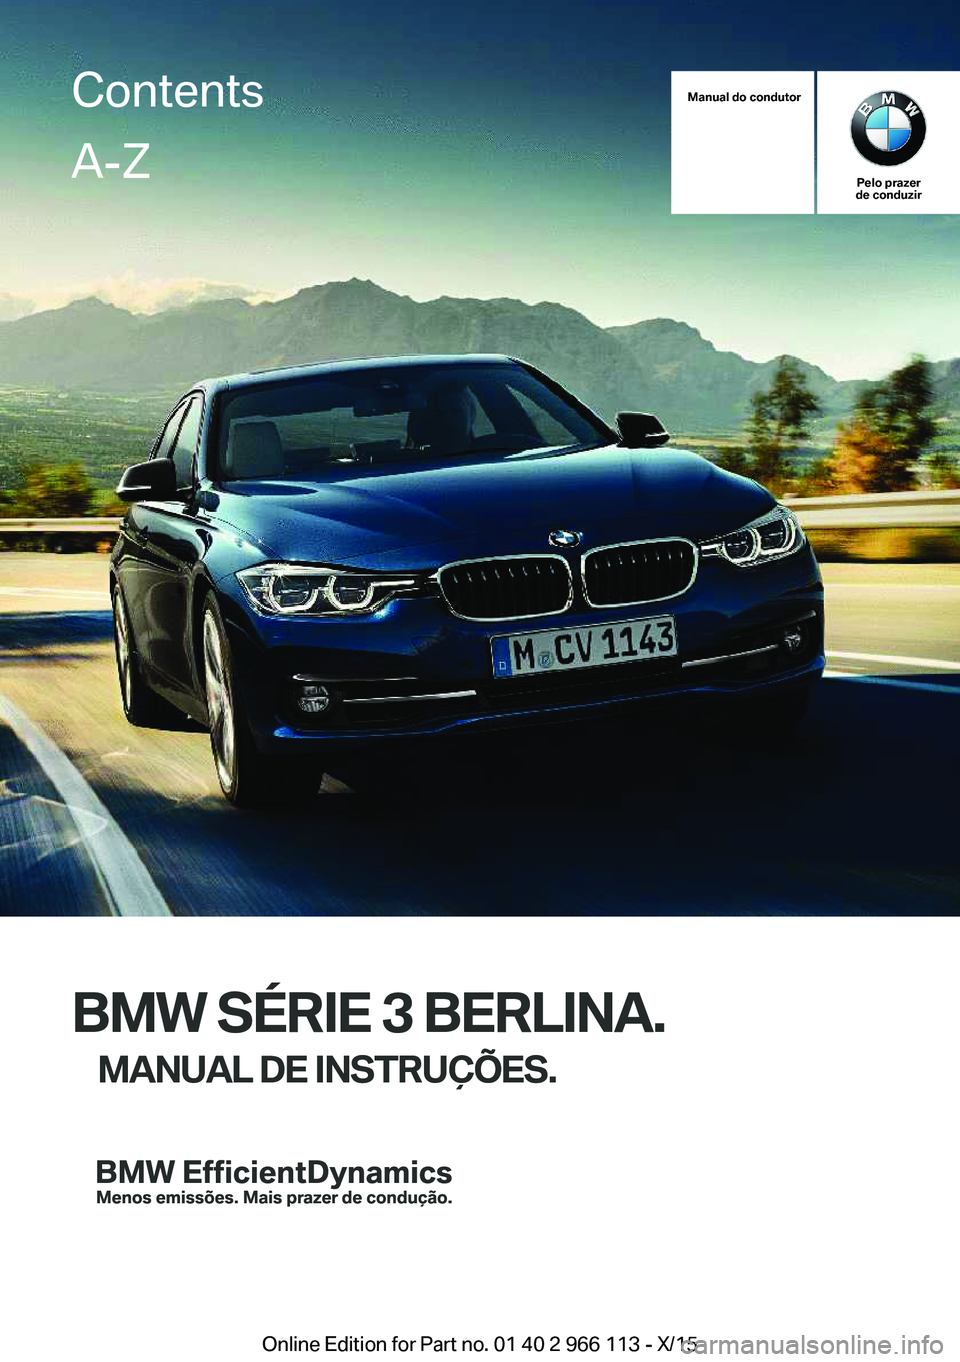 BMW 3 SERIES 2016  Manual do condutor (in Portuguese) Manual do condutor
Pelo prazer
de conduzir
BMW SÉRIE 3 BERLINA.
MANUAL DE INSTRUÇÕES.
ContentsA-Z
Online Edition for Part no. 01 40 2 966 113 - X/15   